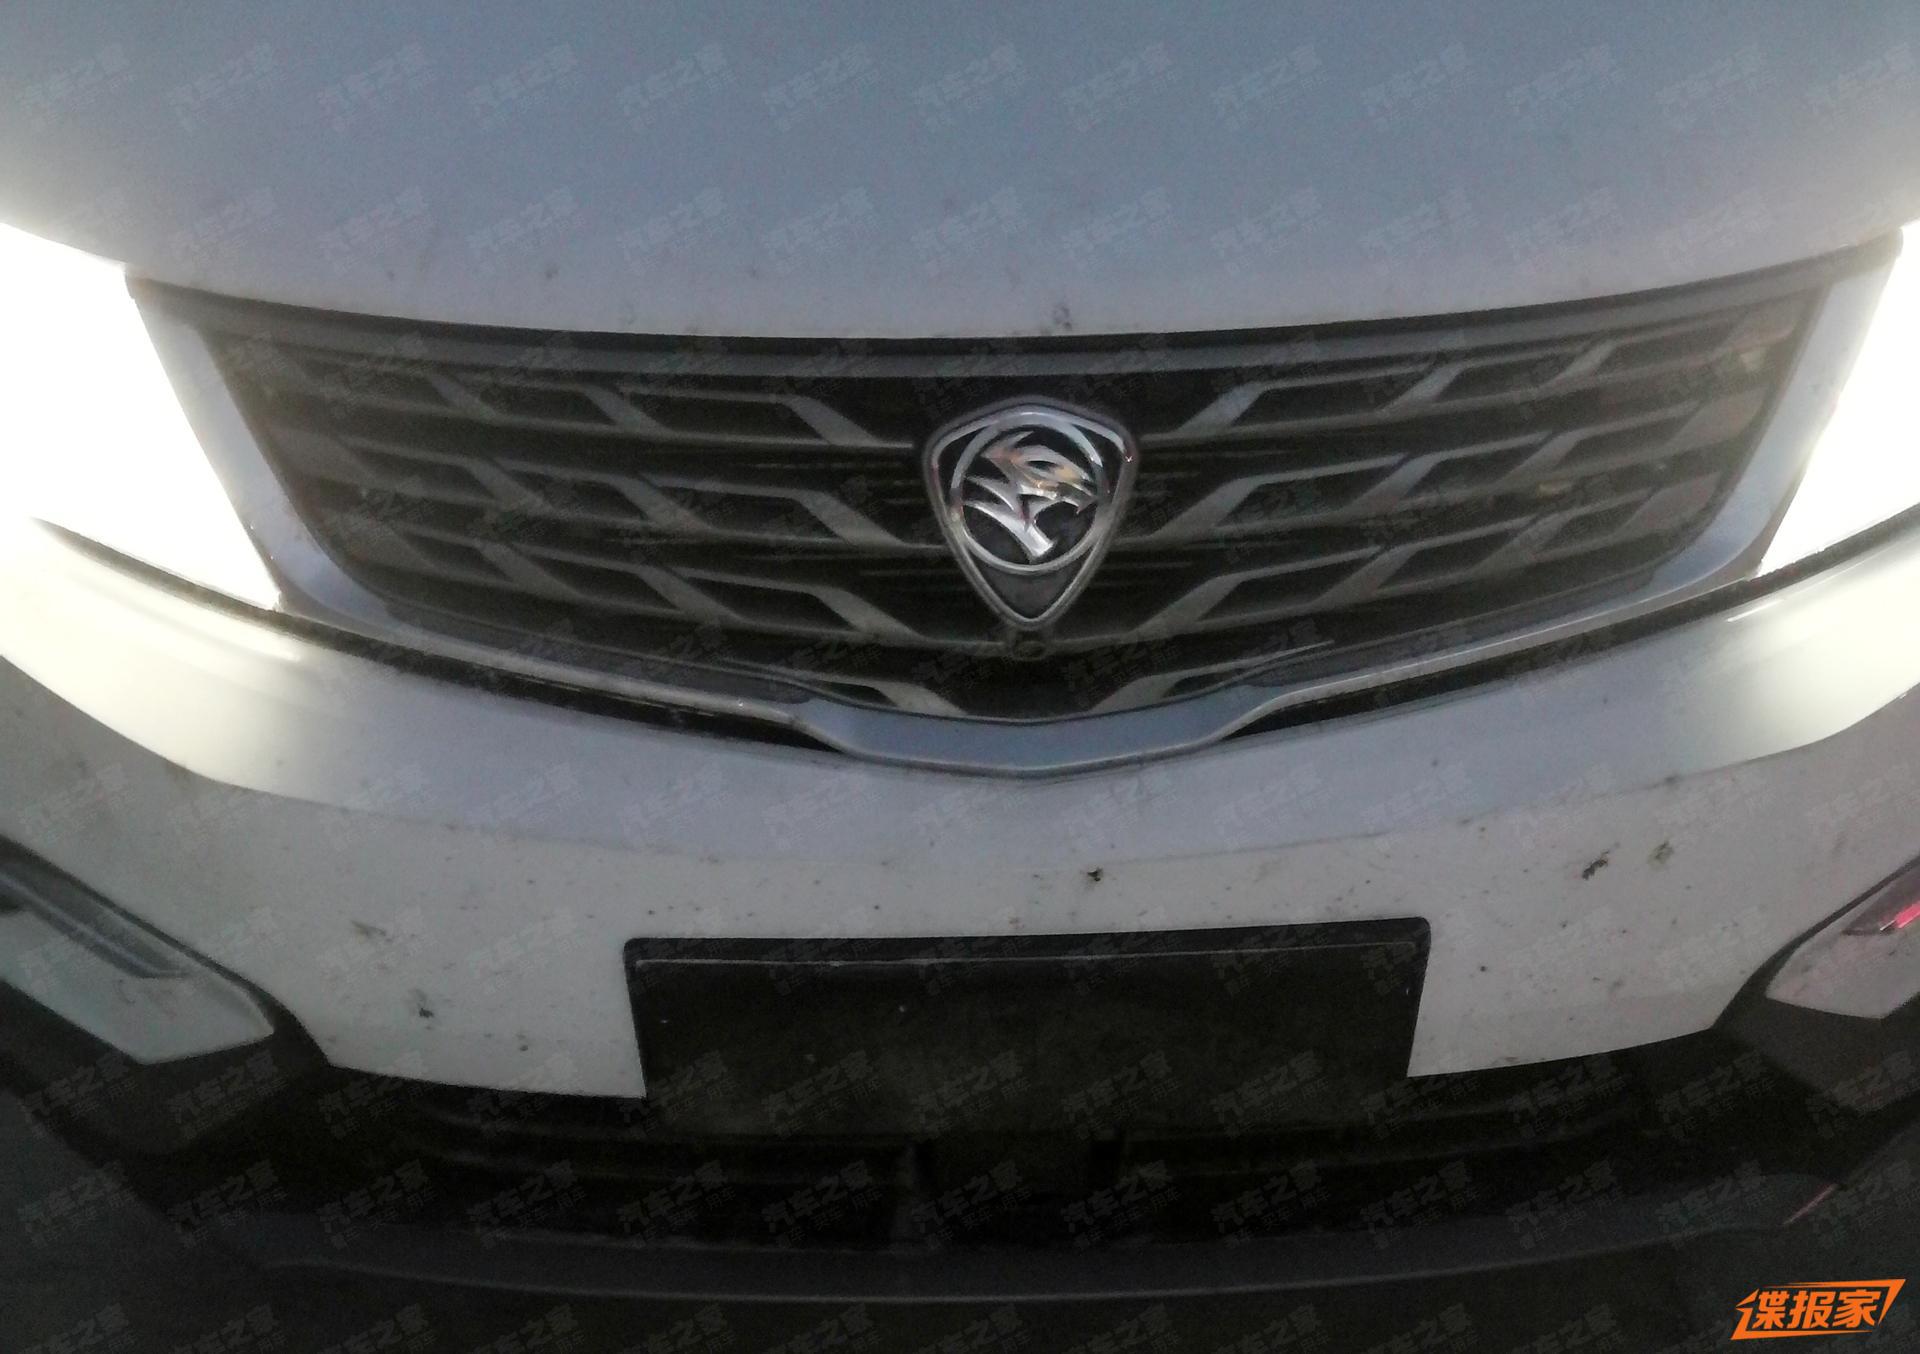 Berita, grille SUV Proton: Seperti Inilah Bocoran Sosok Proton SUV, Yay or Nay?